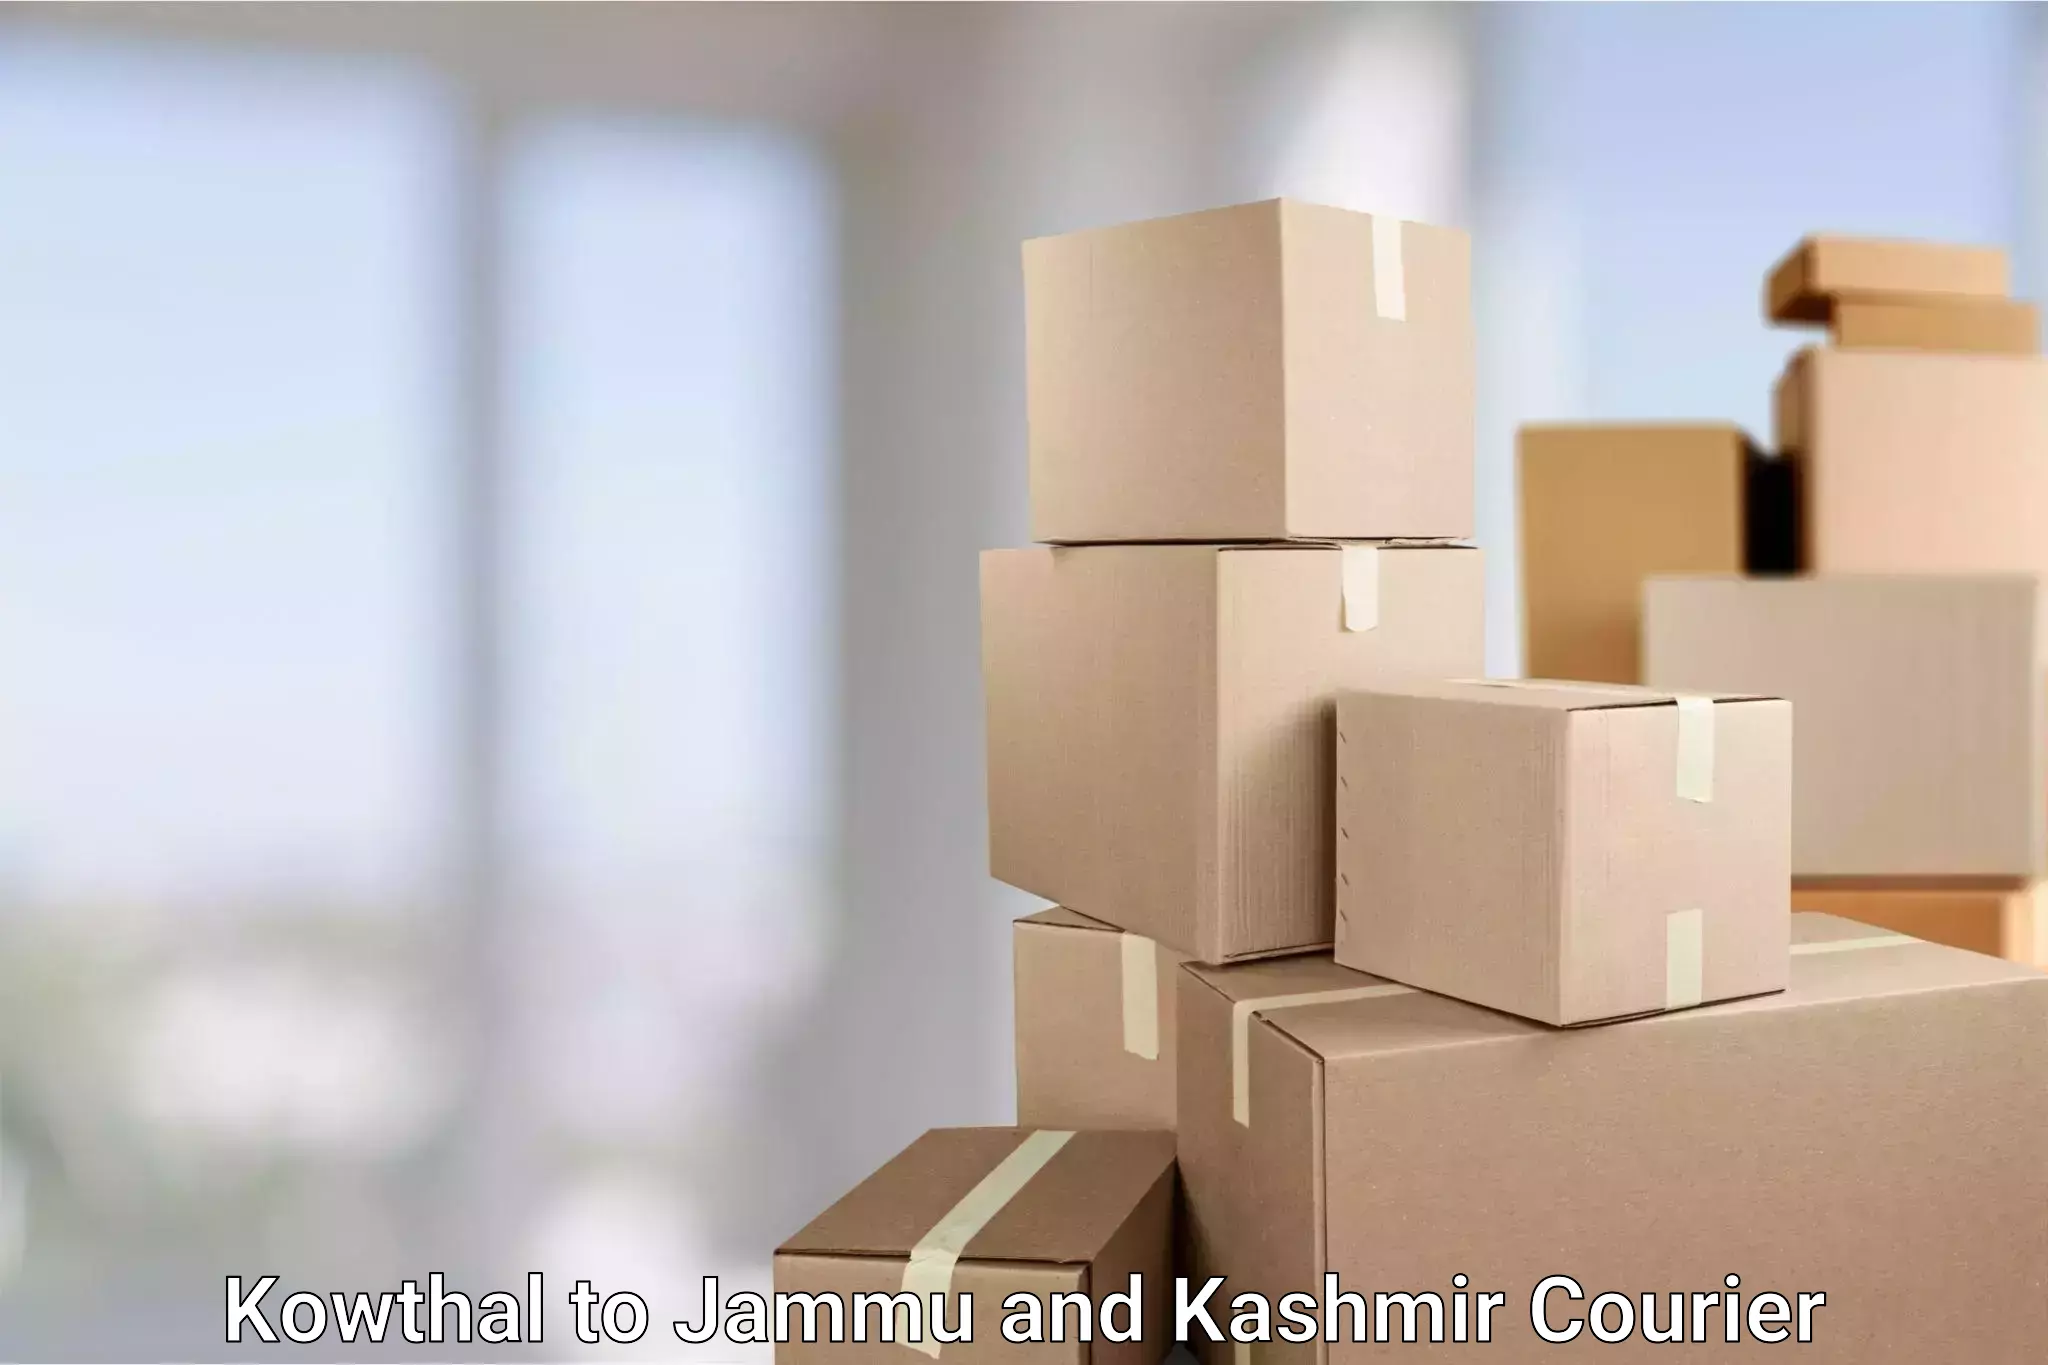 Courier service comparison Kowthal to Jammu and Kashmir